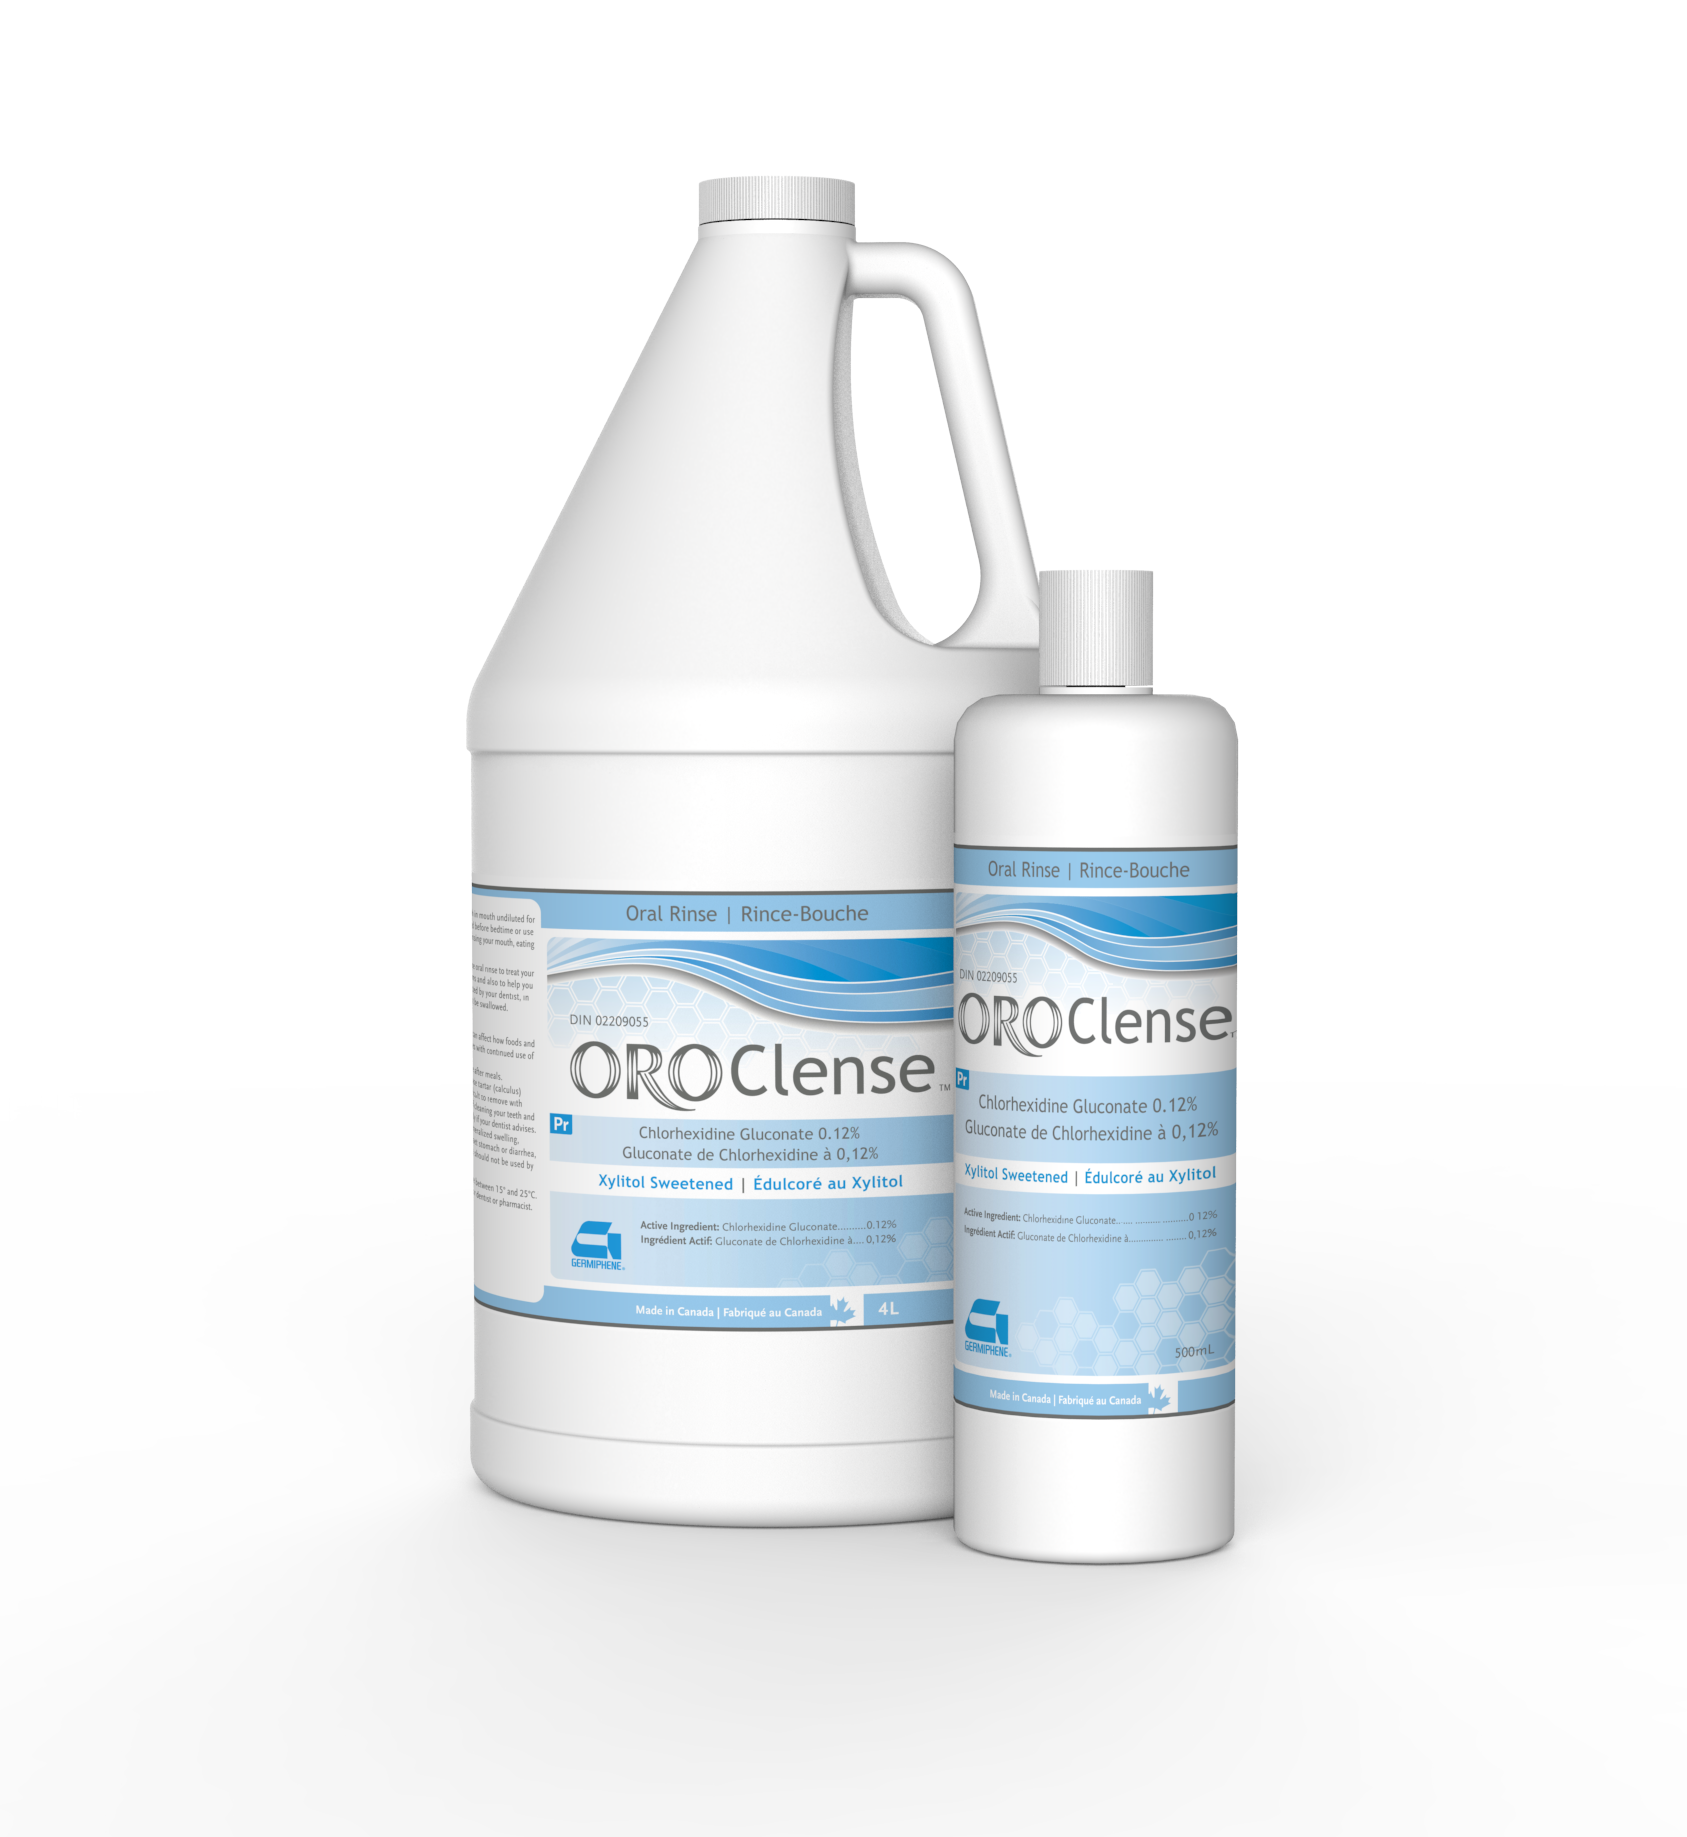 ORO Clense 0.12% Chlorhexidine Gluconate Oral Rinse, Set